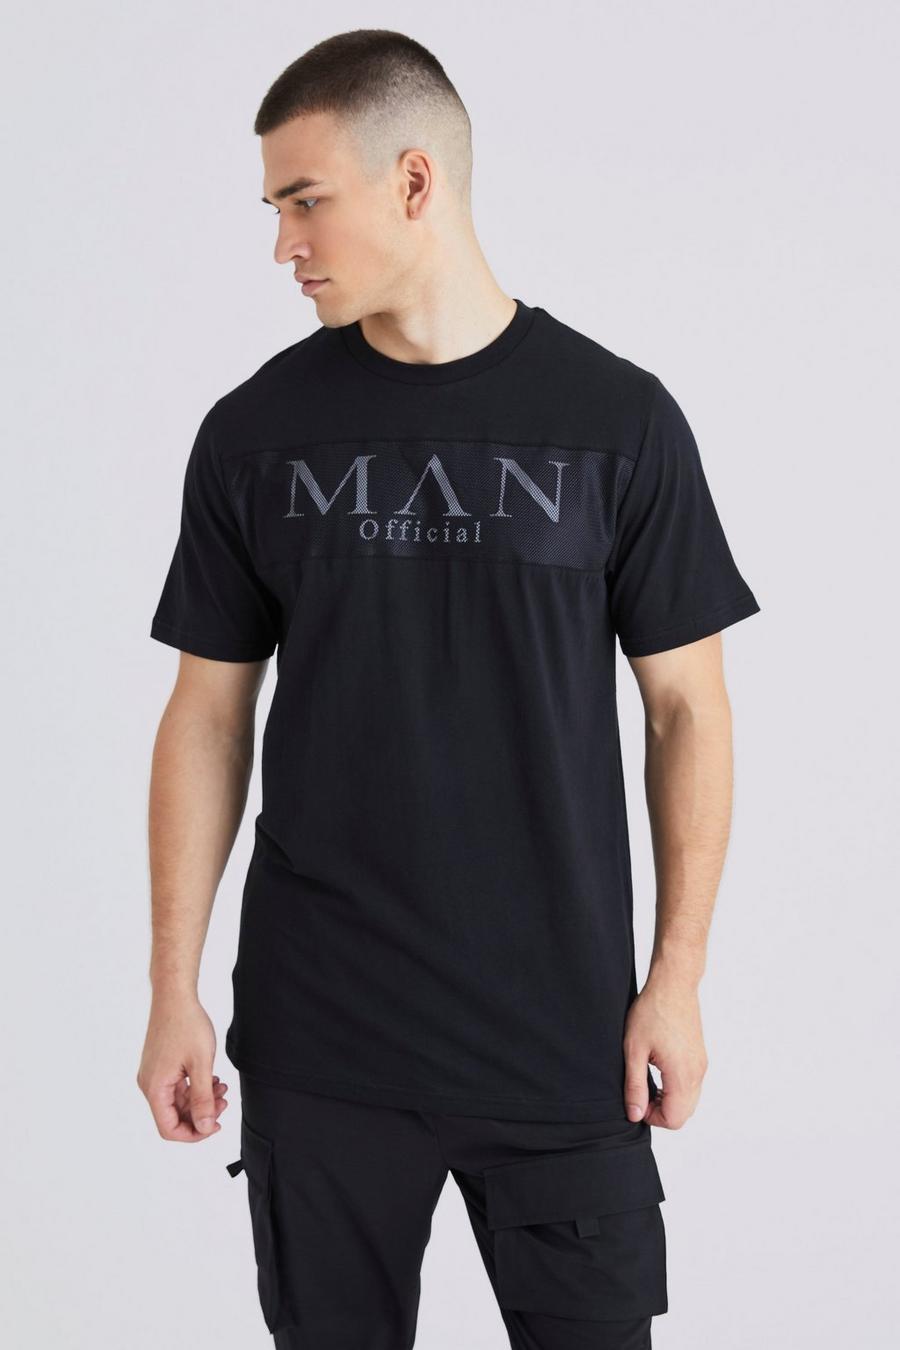 Camiseta Tall MAN ajustada reflectante de malla con capas superpuestas, Black